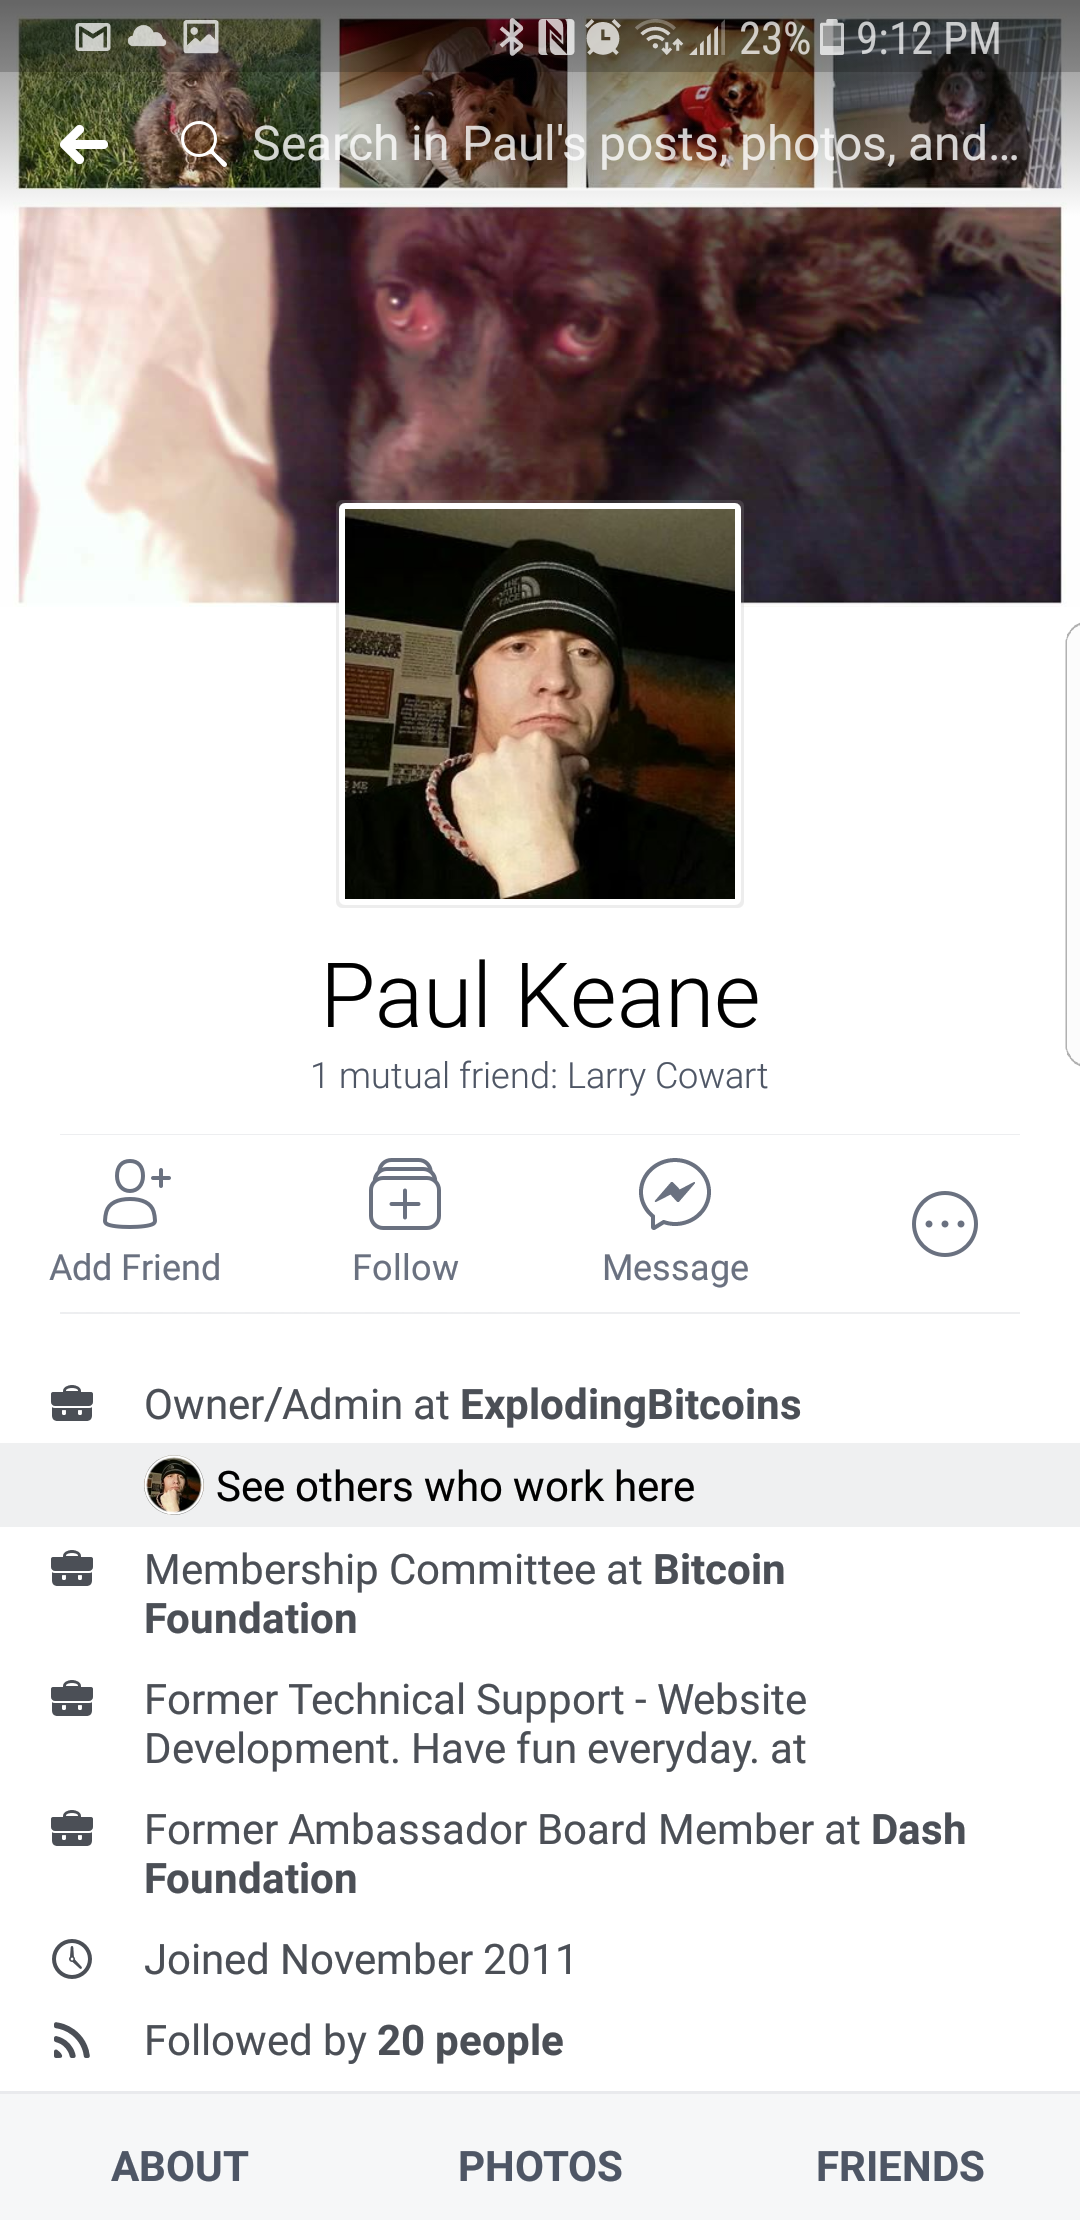 His Facebook profile